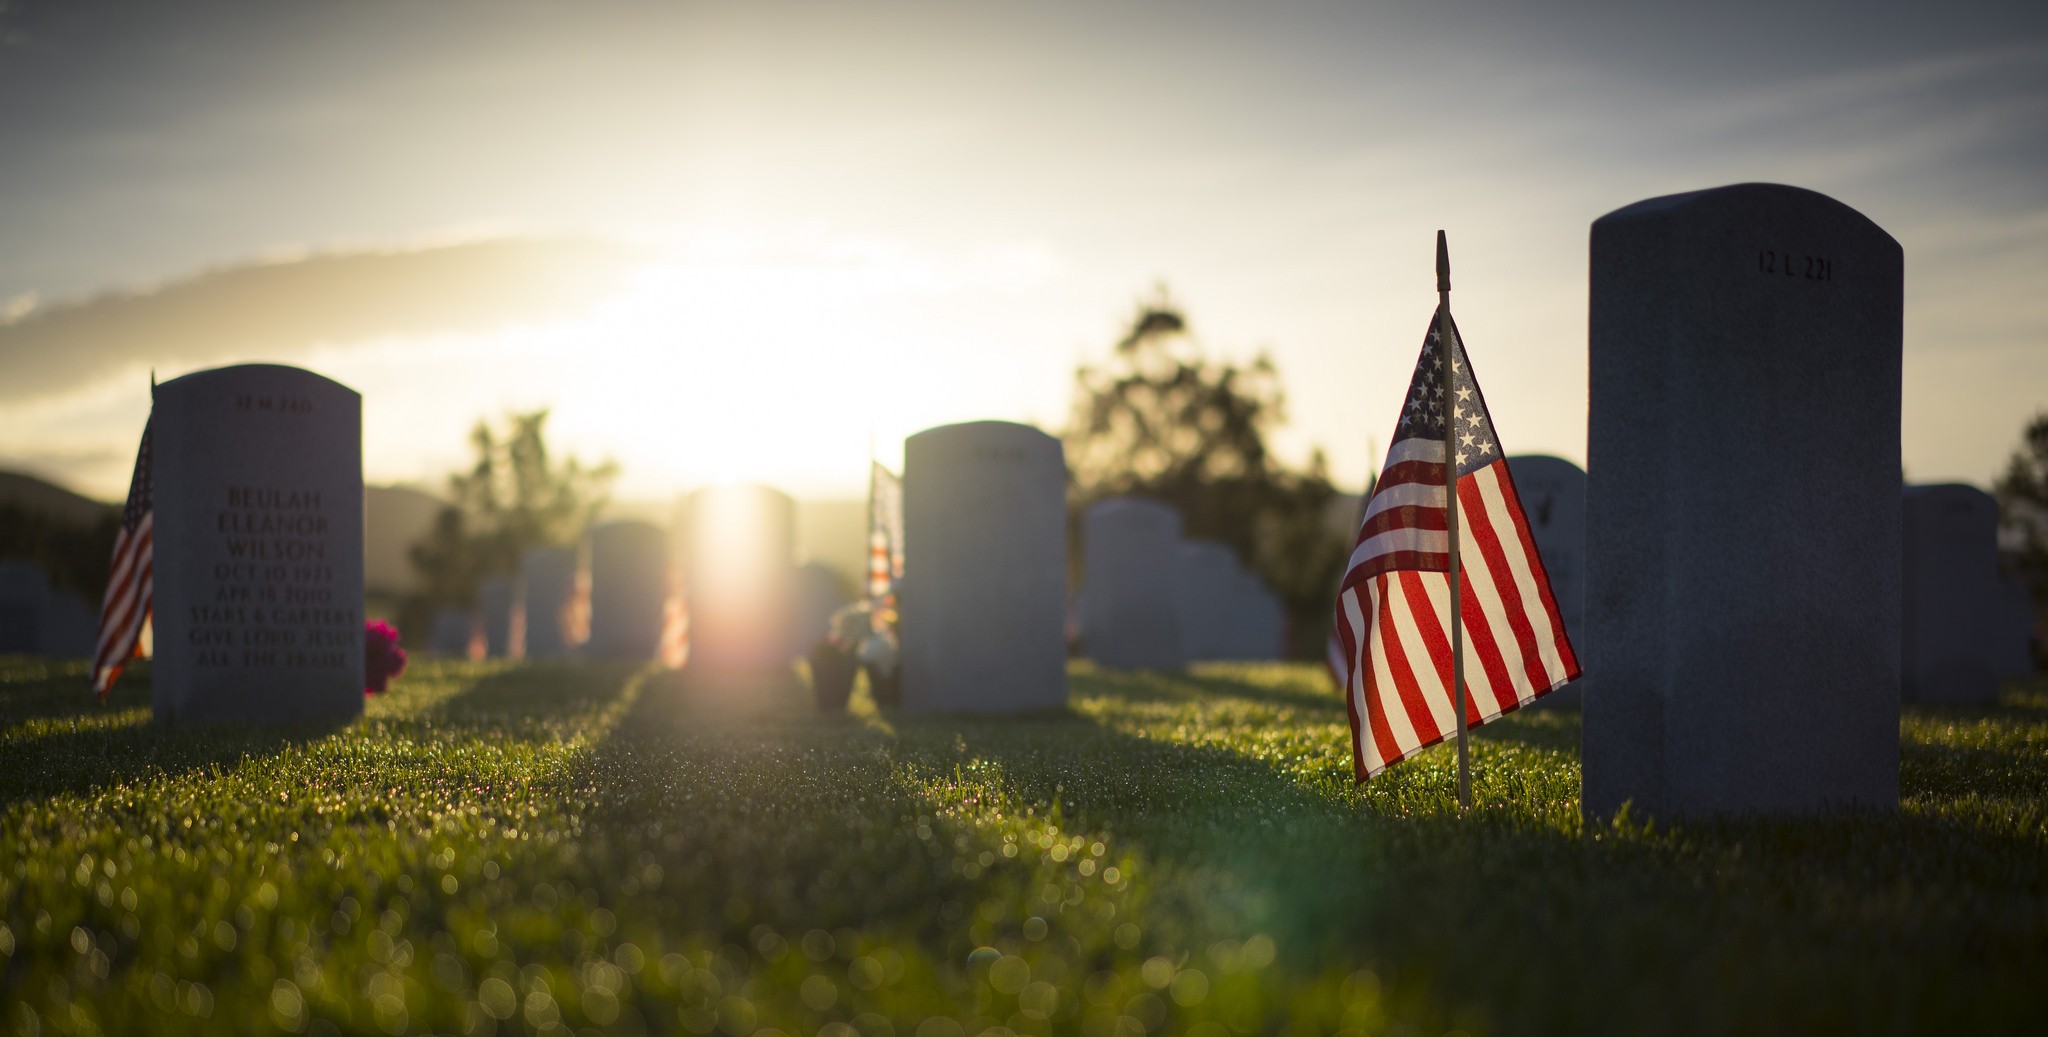 General 2048x1037 USA military memorial patriotic American flag tombstones graveyards sunlight